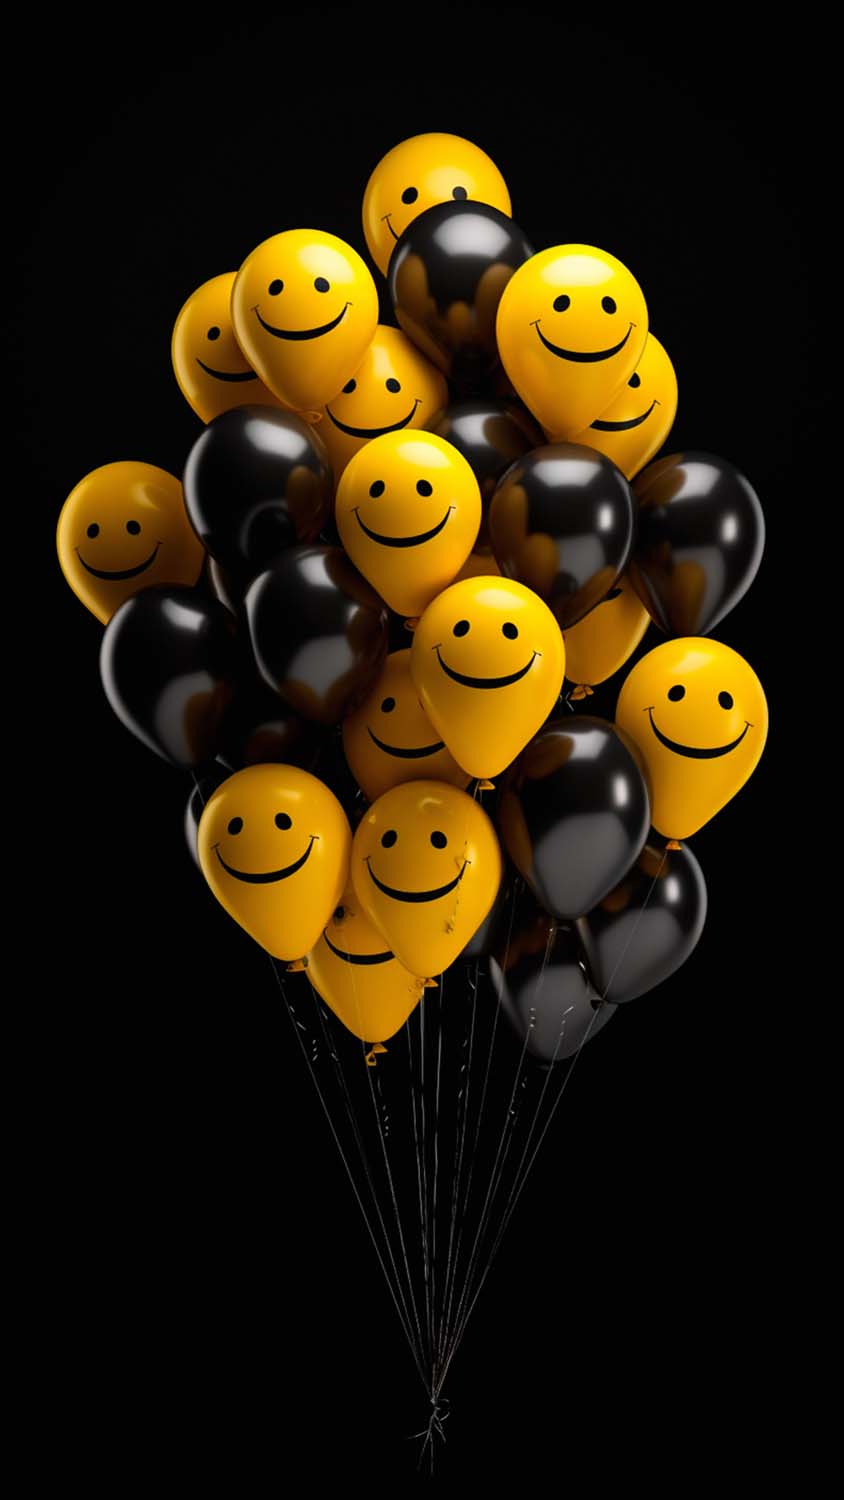 Smile Balloons iPhone Wallpaper HD